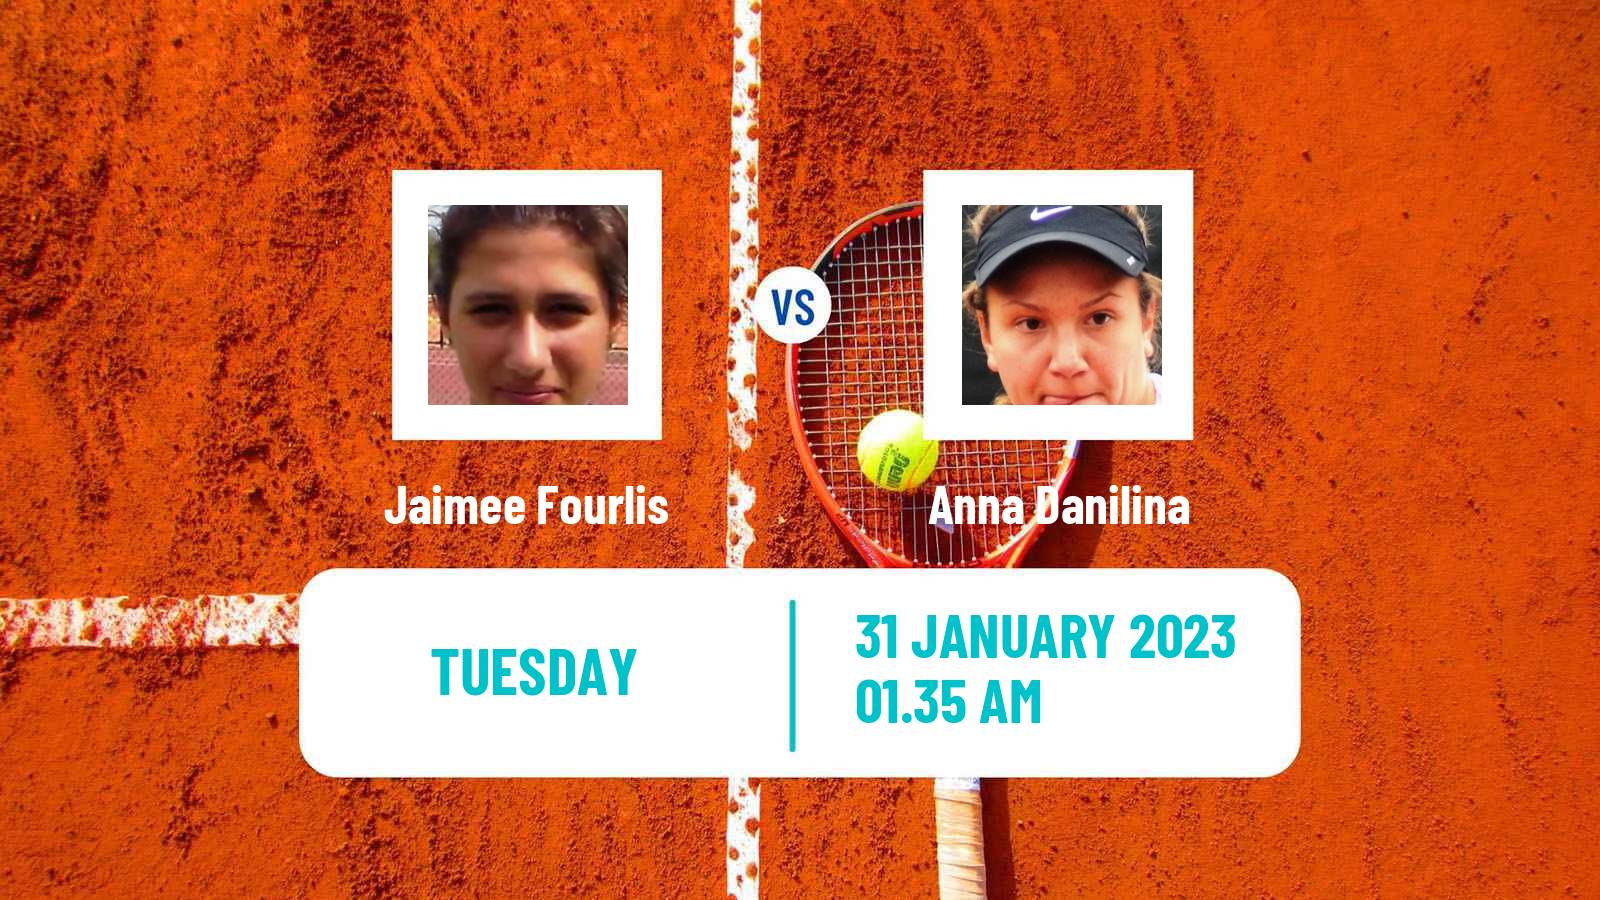 Tennis ITF Tournaments Jaimee Fourlis - Anna Danilina